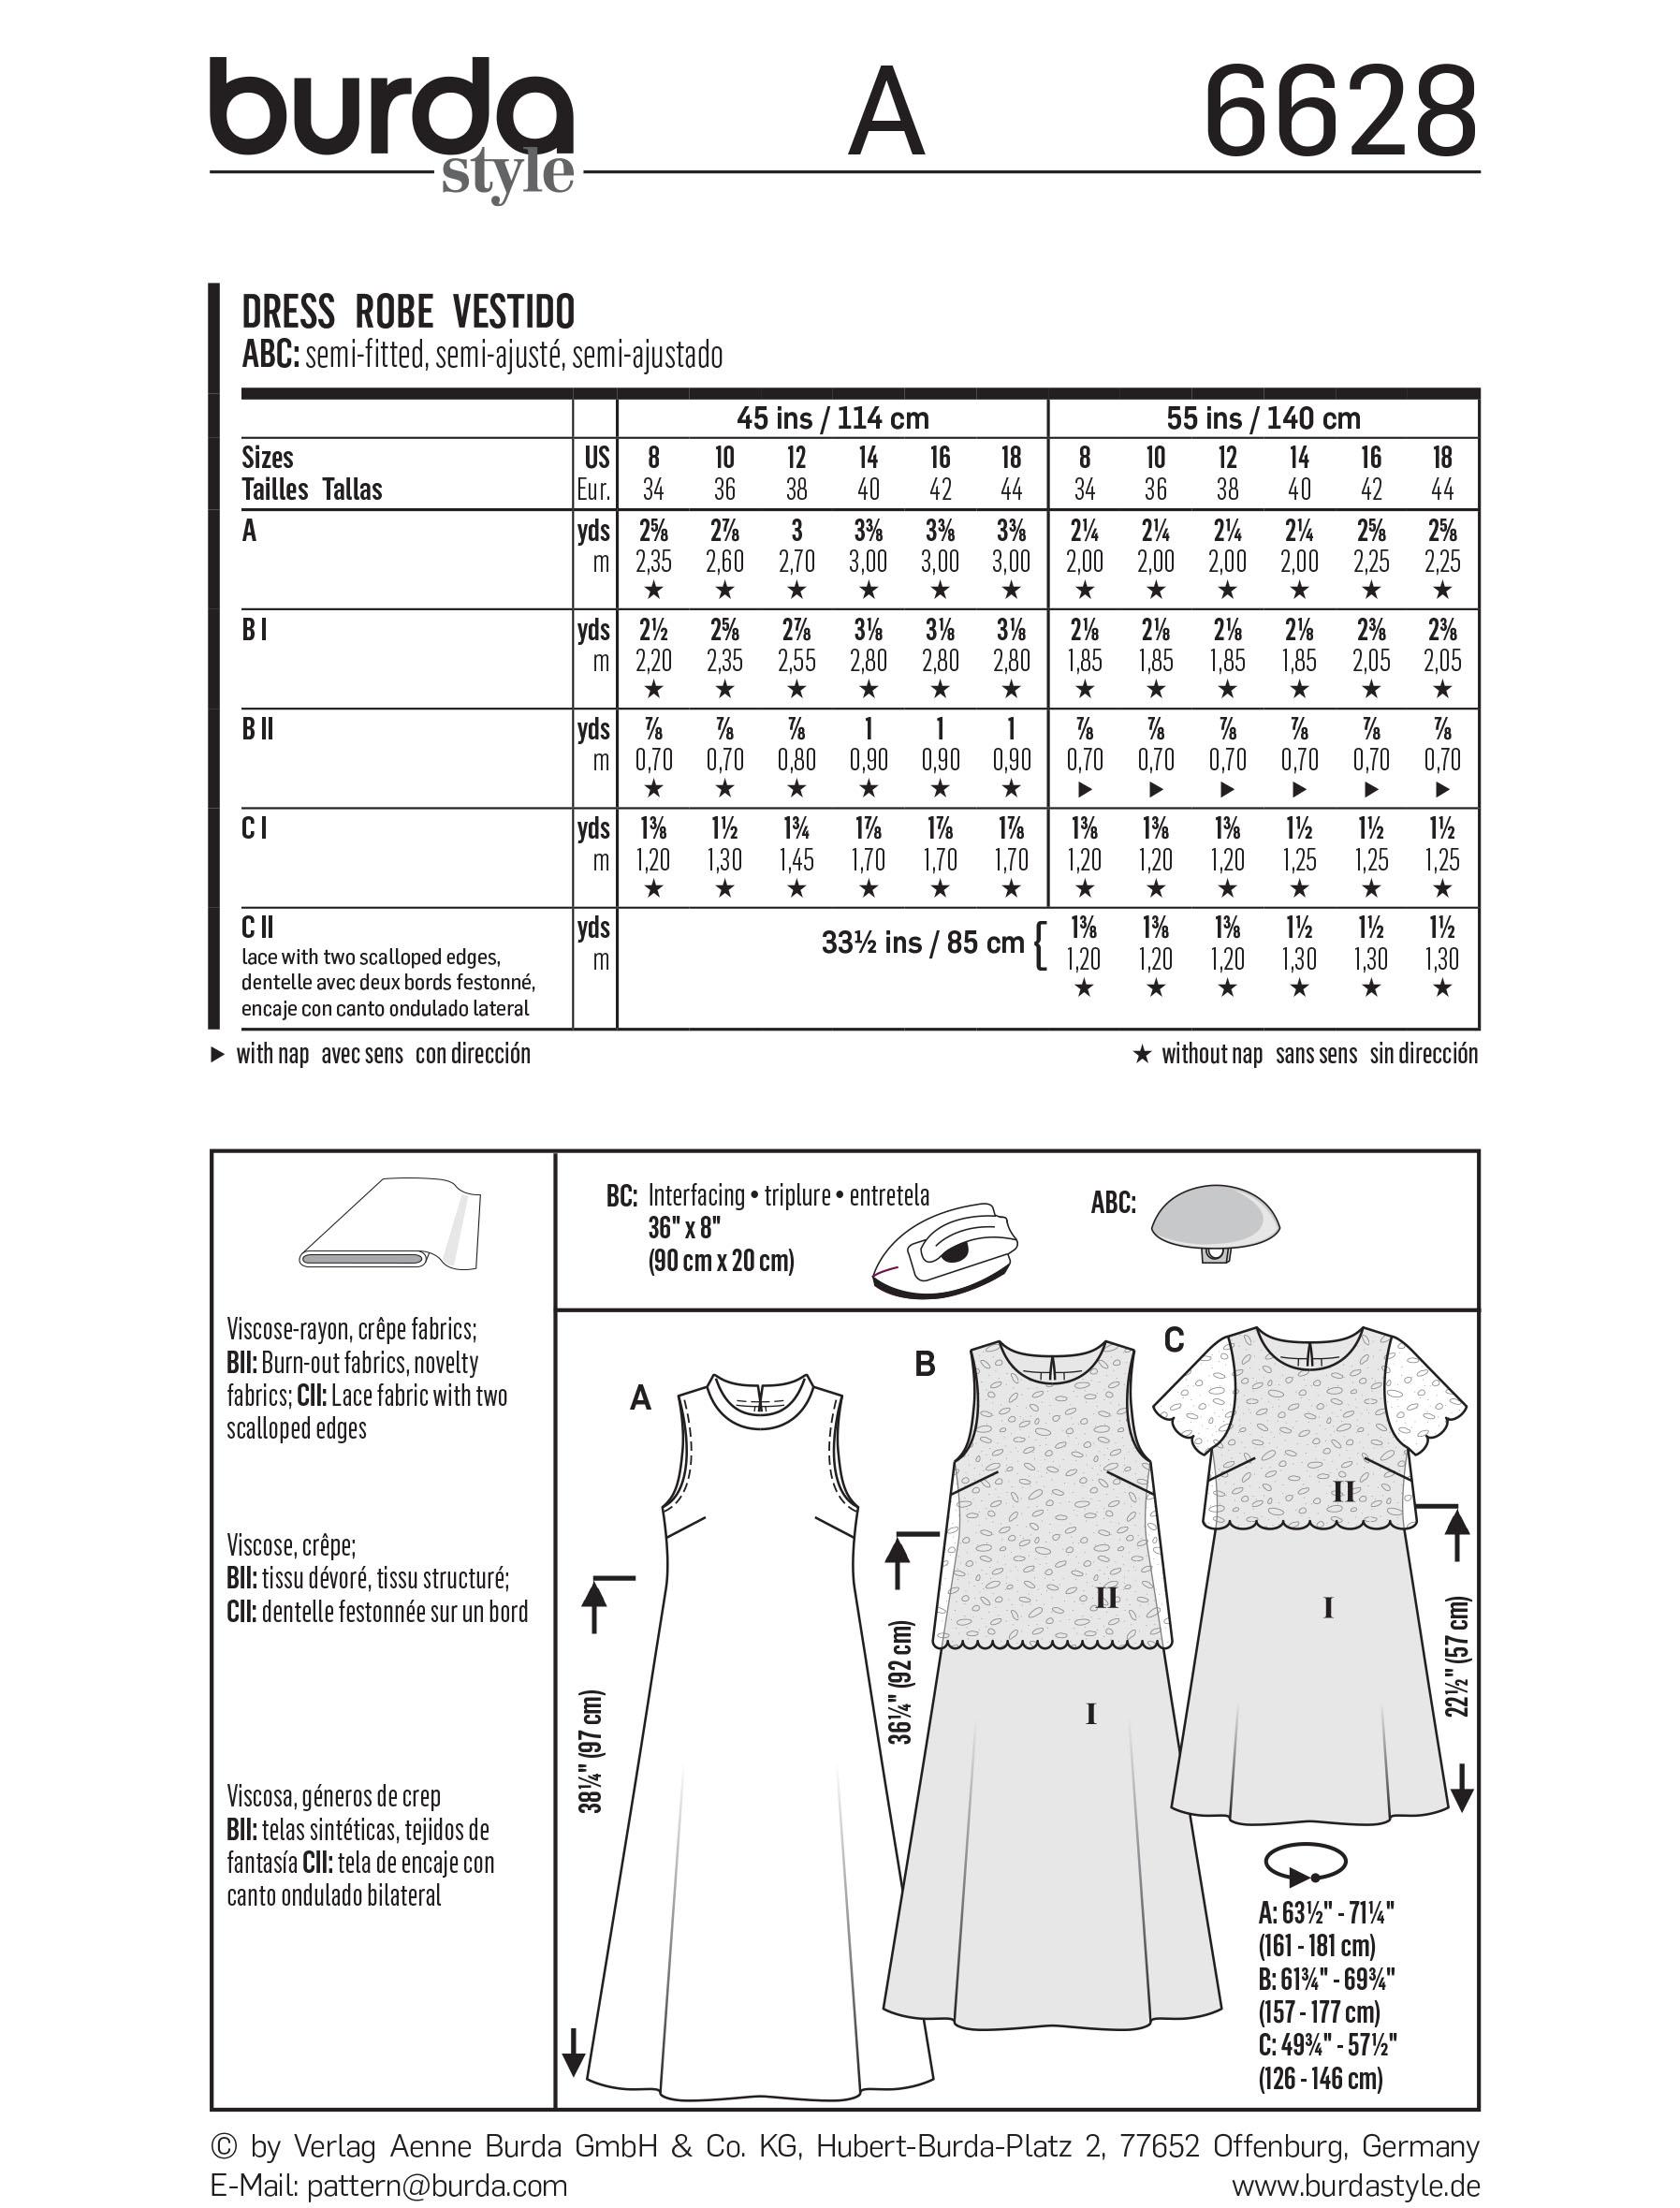 Burda B6628 Women's Dress Sewing Pattern